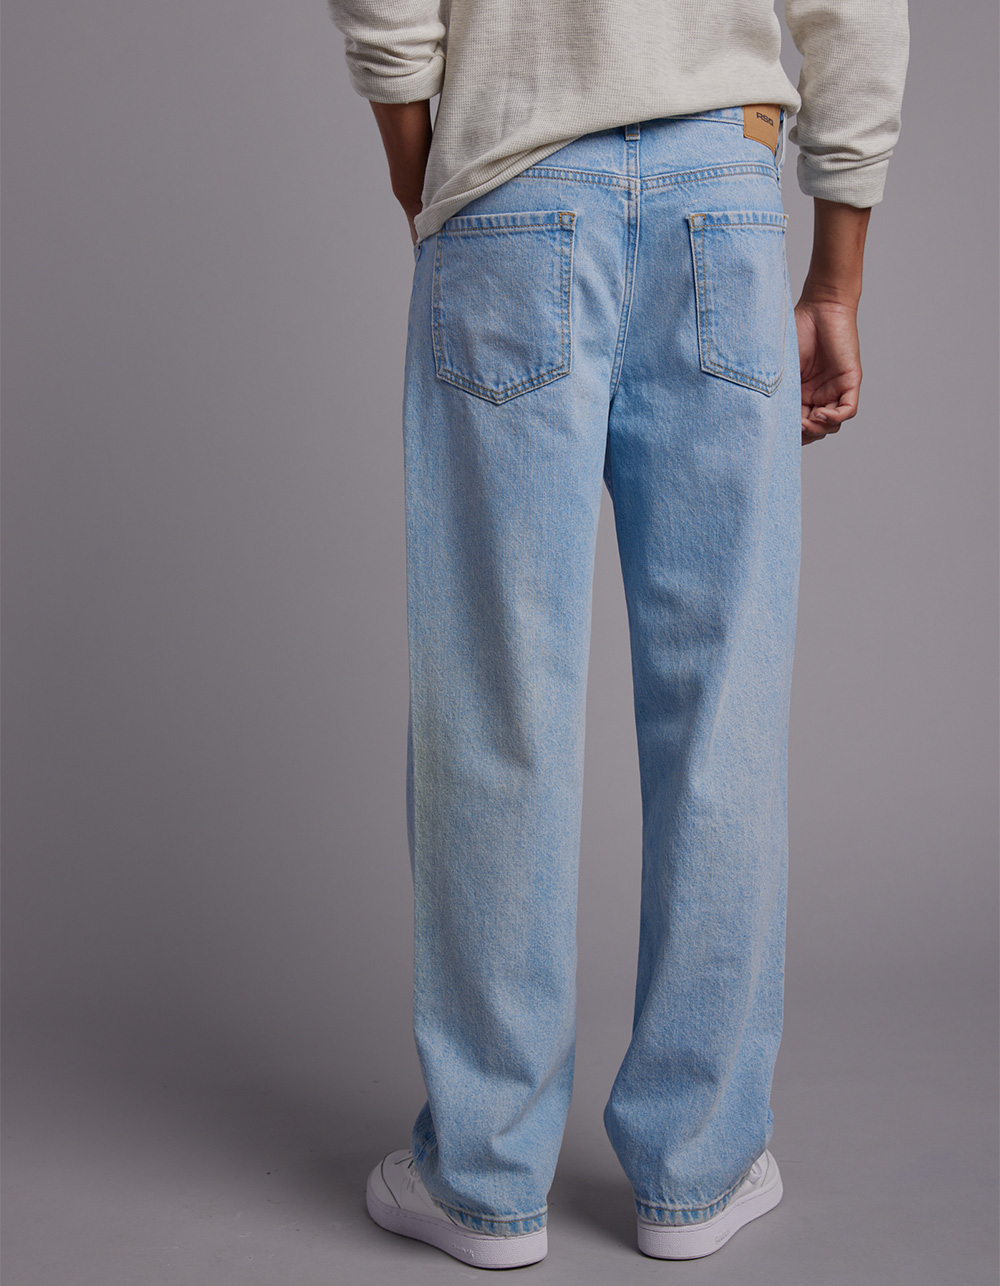 3 Ways of Styling Denim Jeans for Men - Peter England Blogs-nextbuild.com.vn